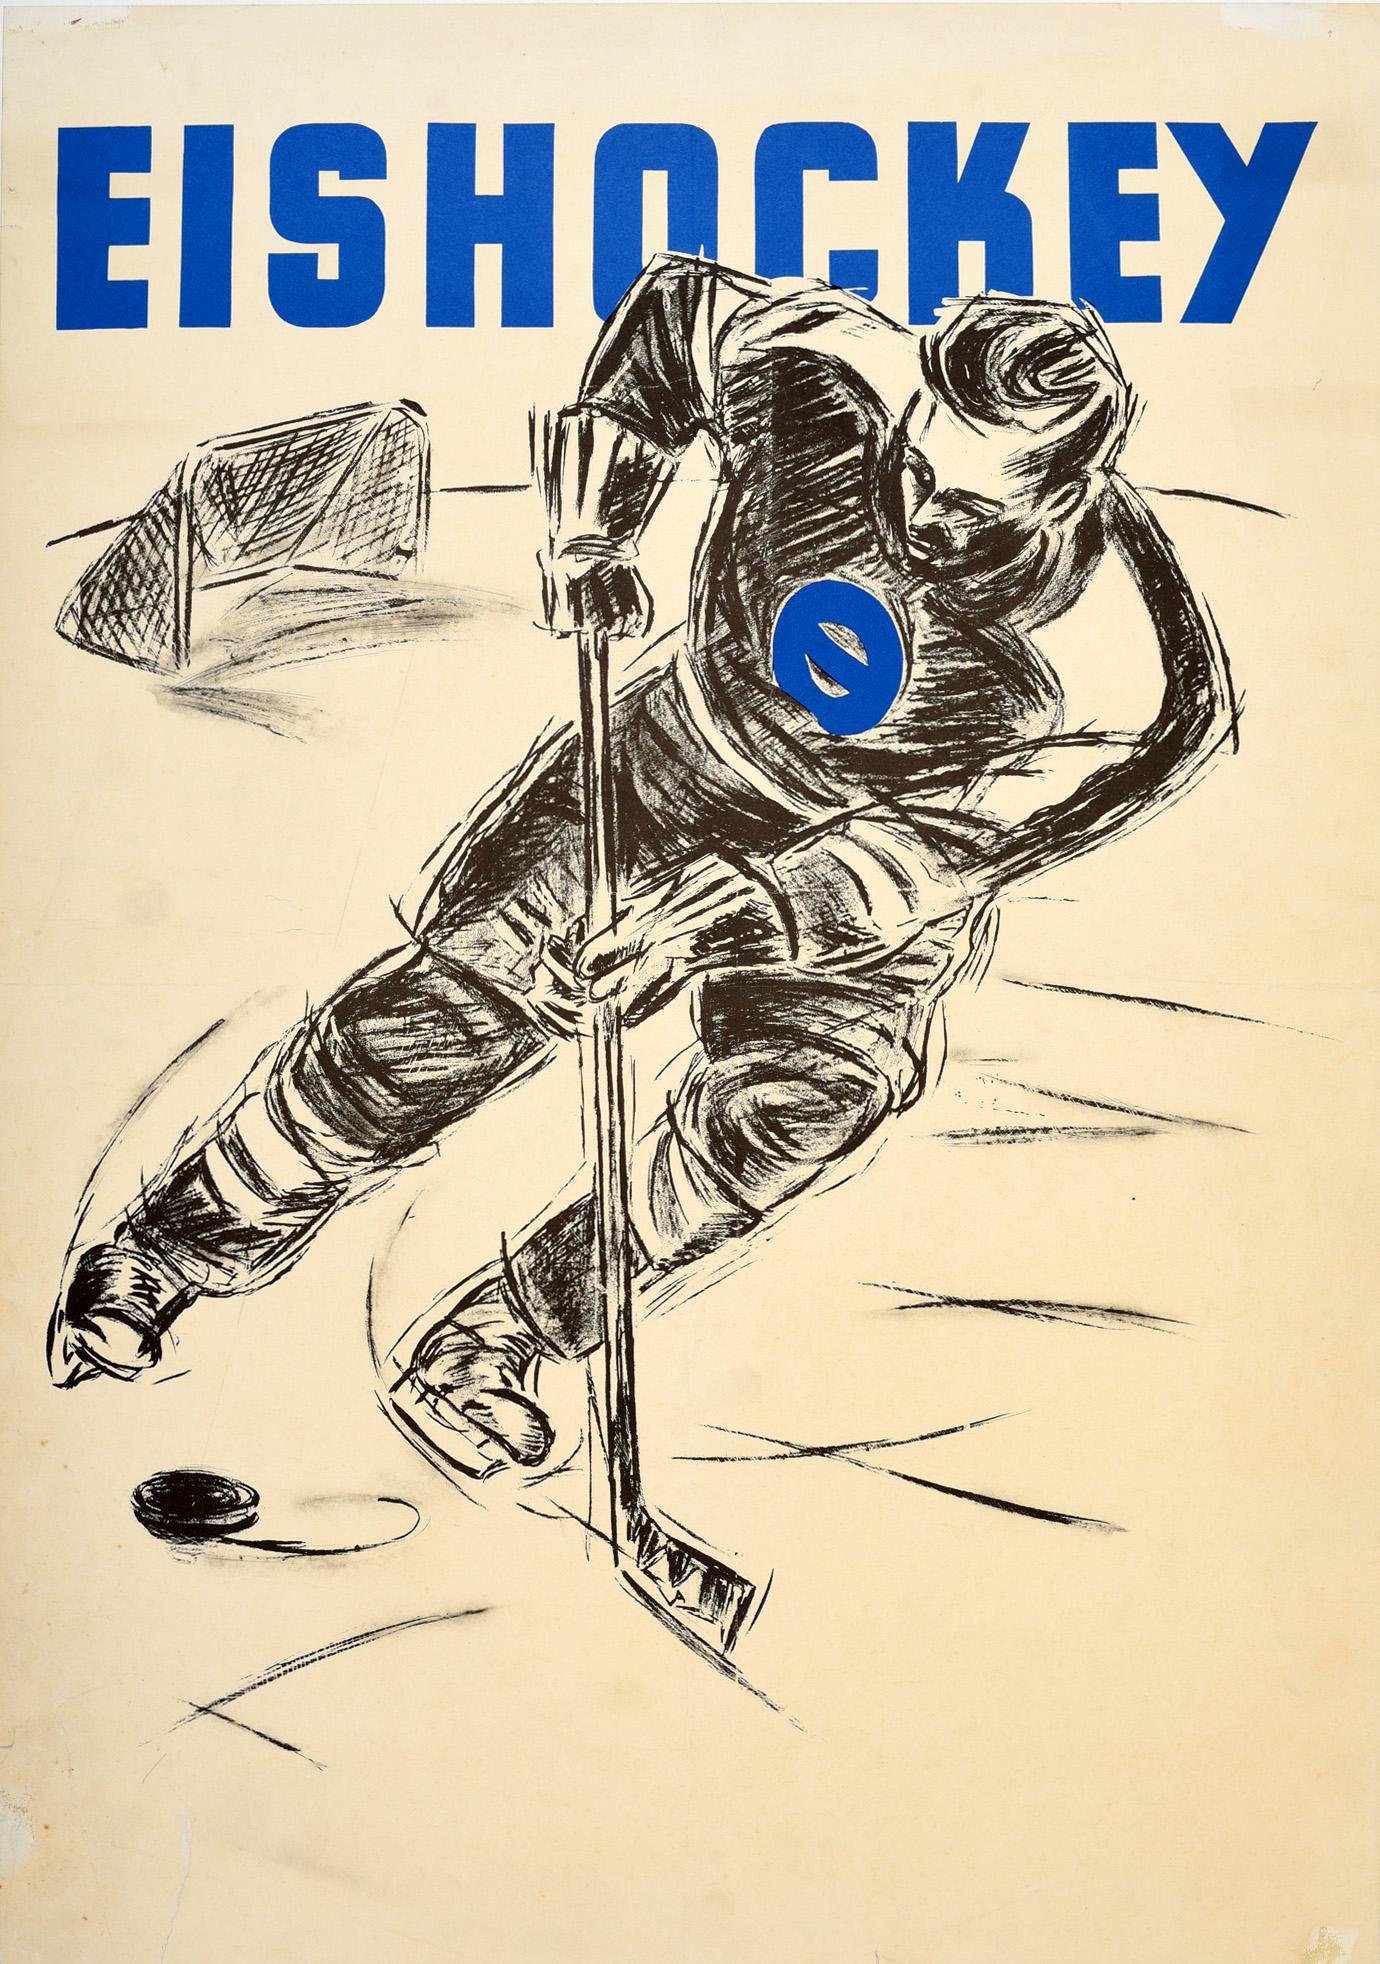 Unknown Print - Original Vintage Poster For Eishockey Ice Hockey Sport Skater Ice Rink Puck Goal